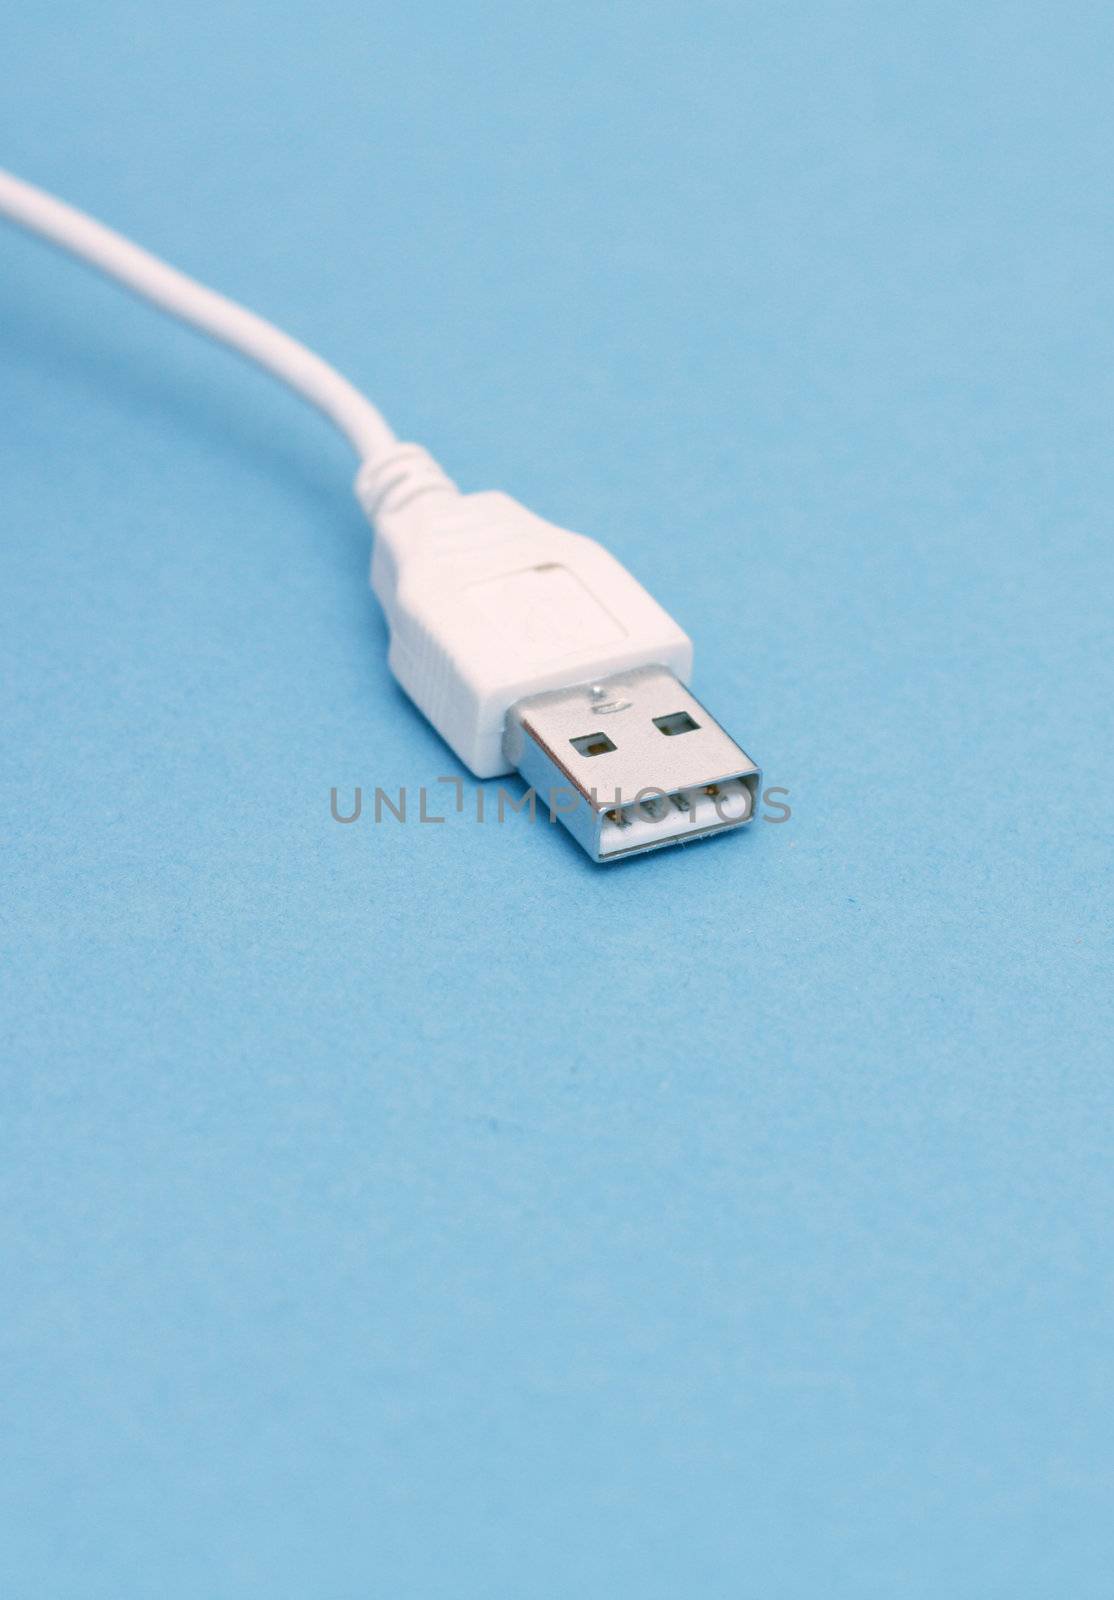 USB plug by leeser